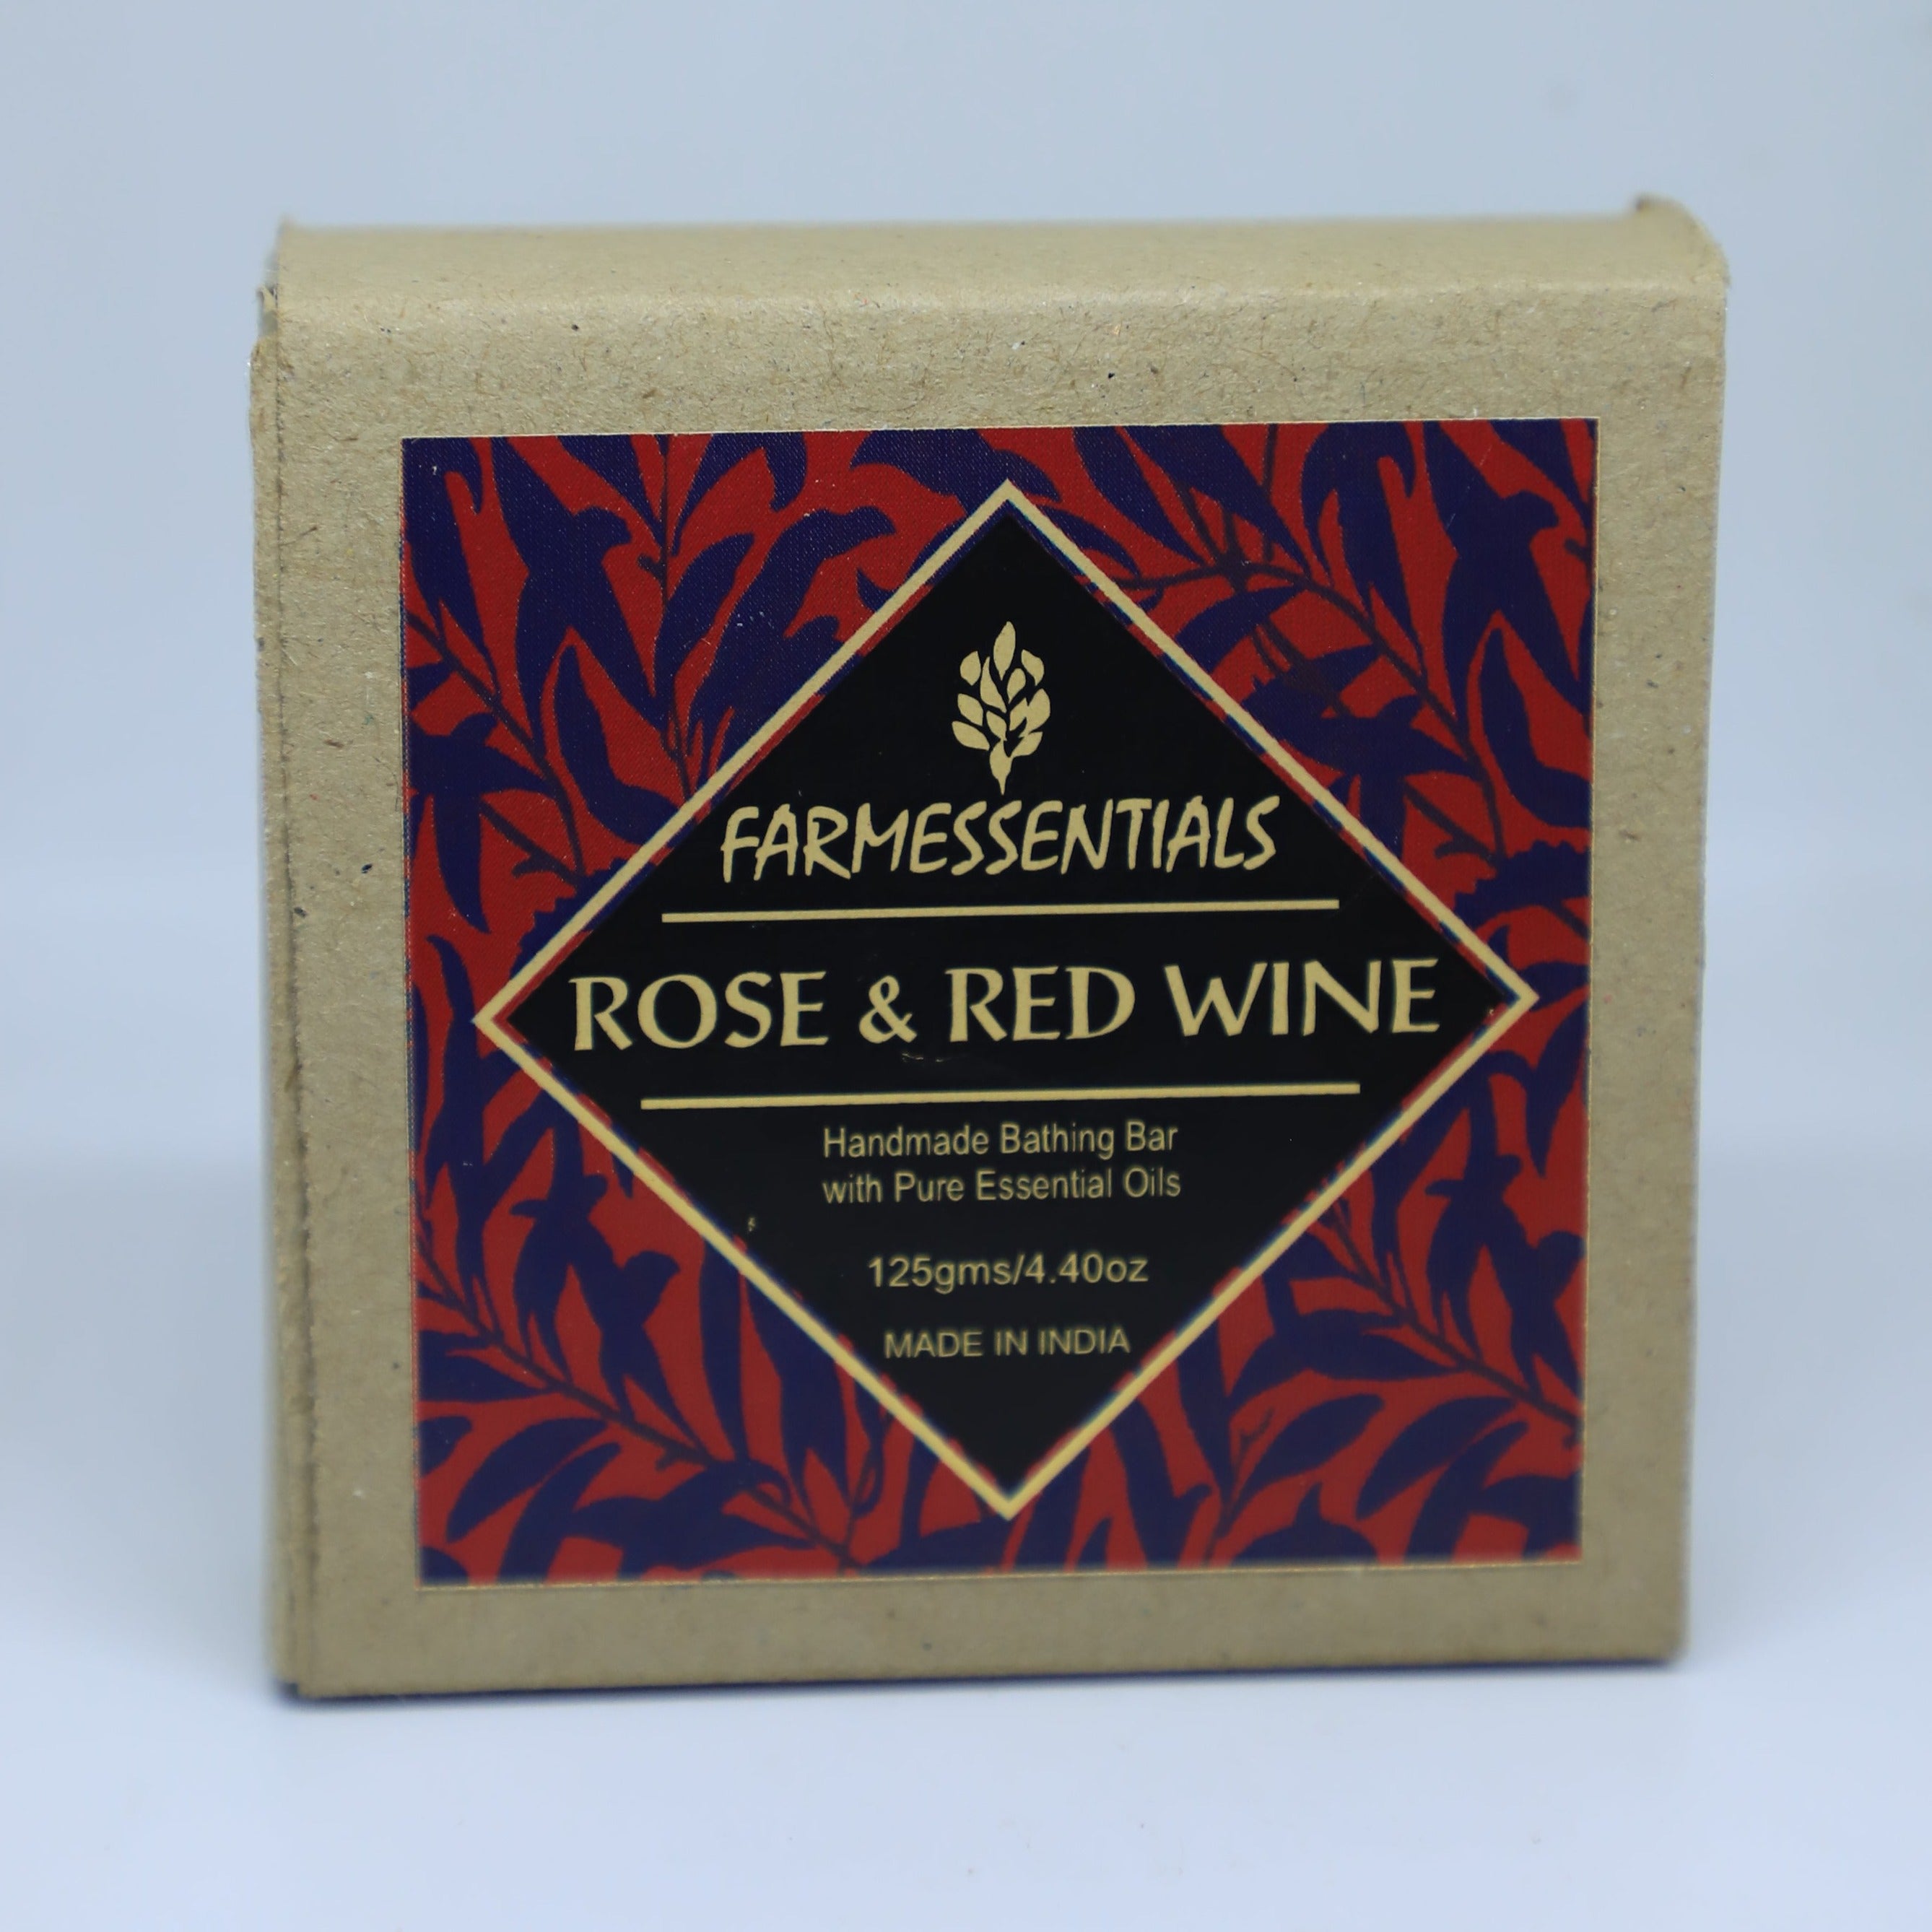 Rose & Red Wine